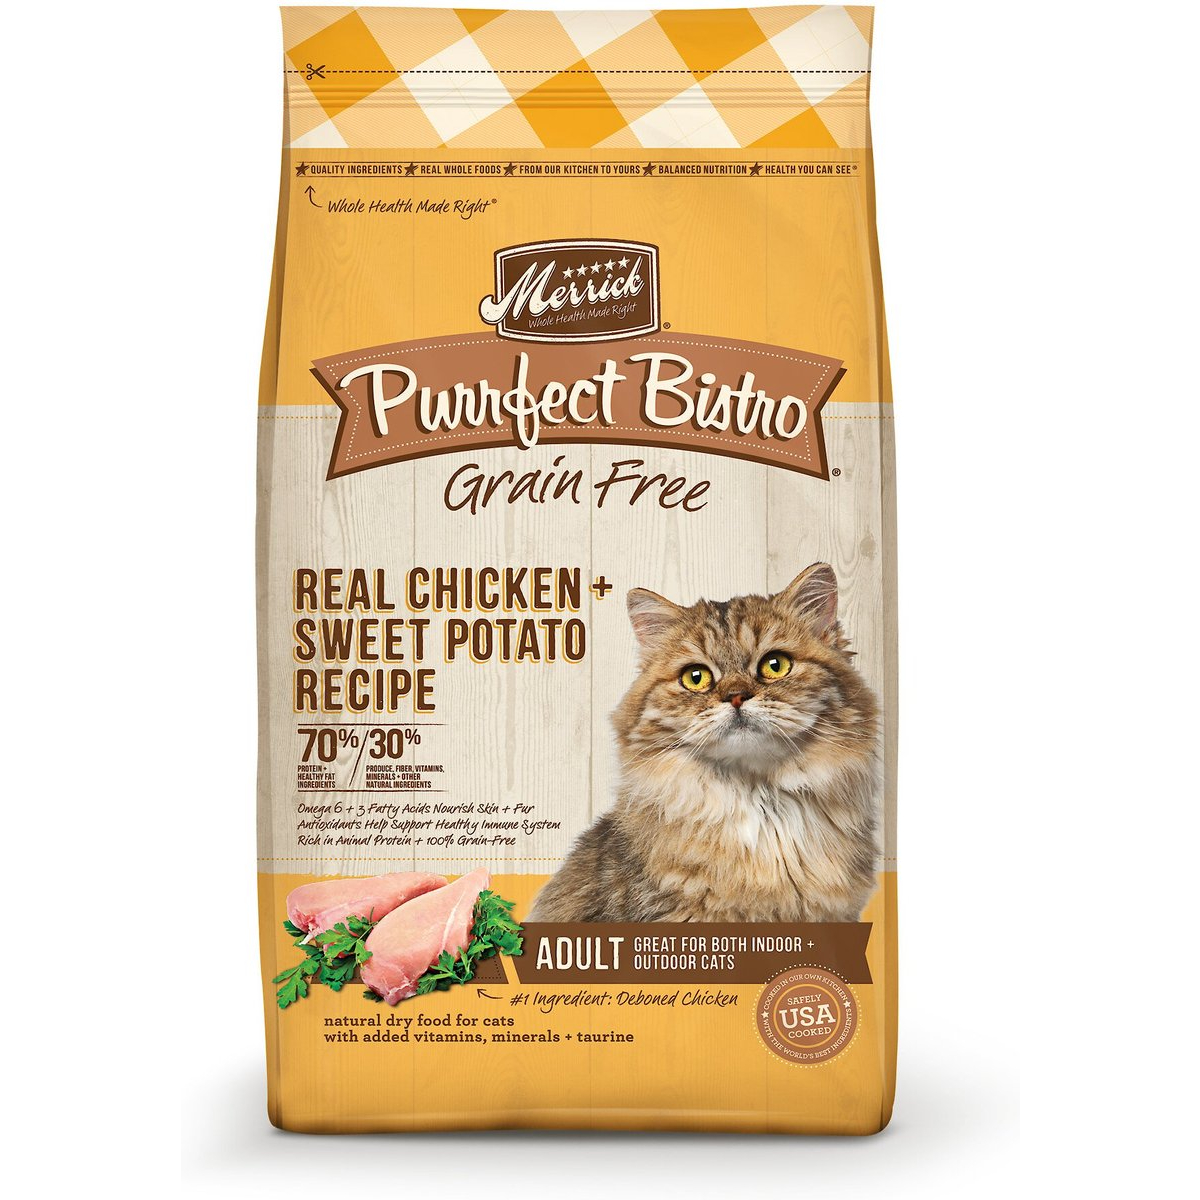 Merrick Purrfect Bistro Grain-Free Real Chicken Sweet Potato Recipe Adult Dry Cat Food